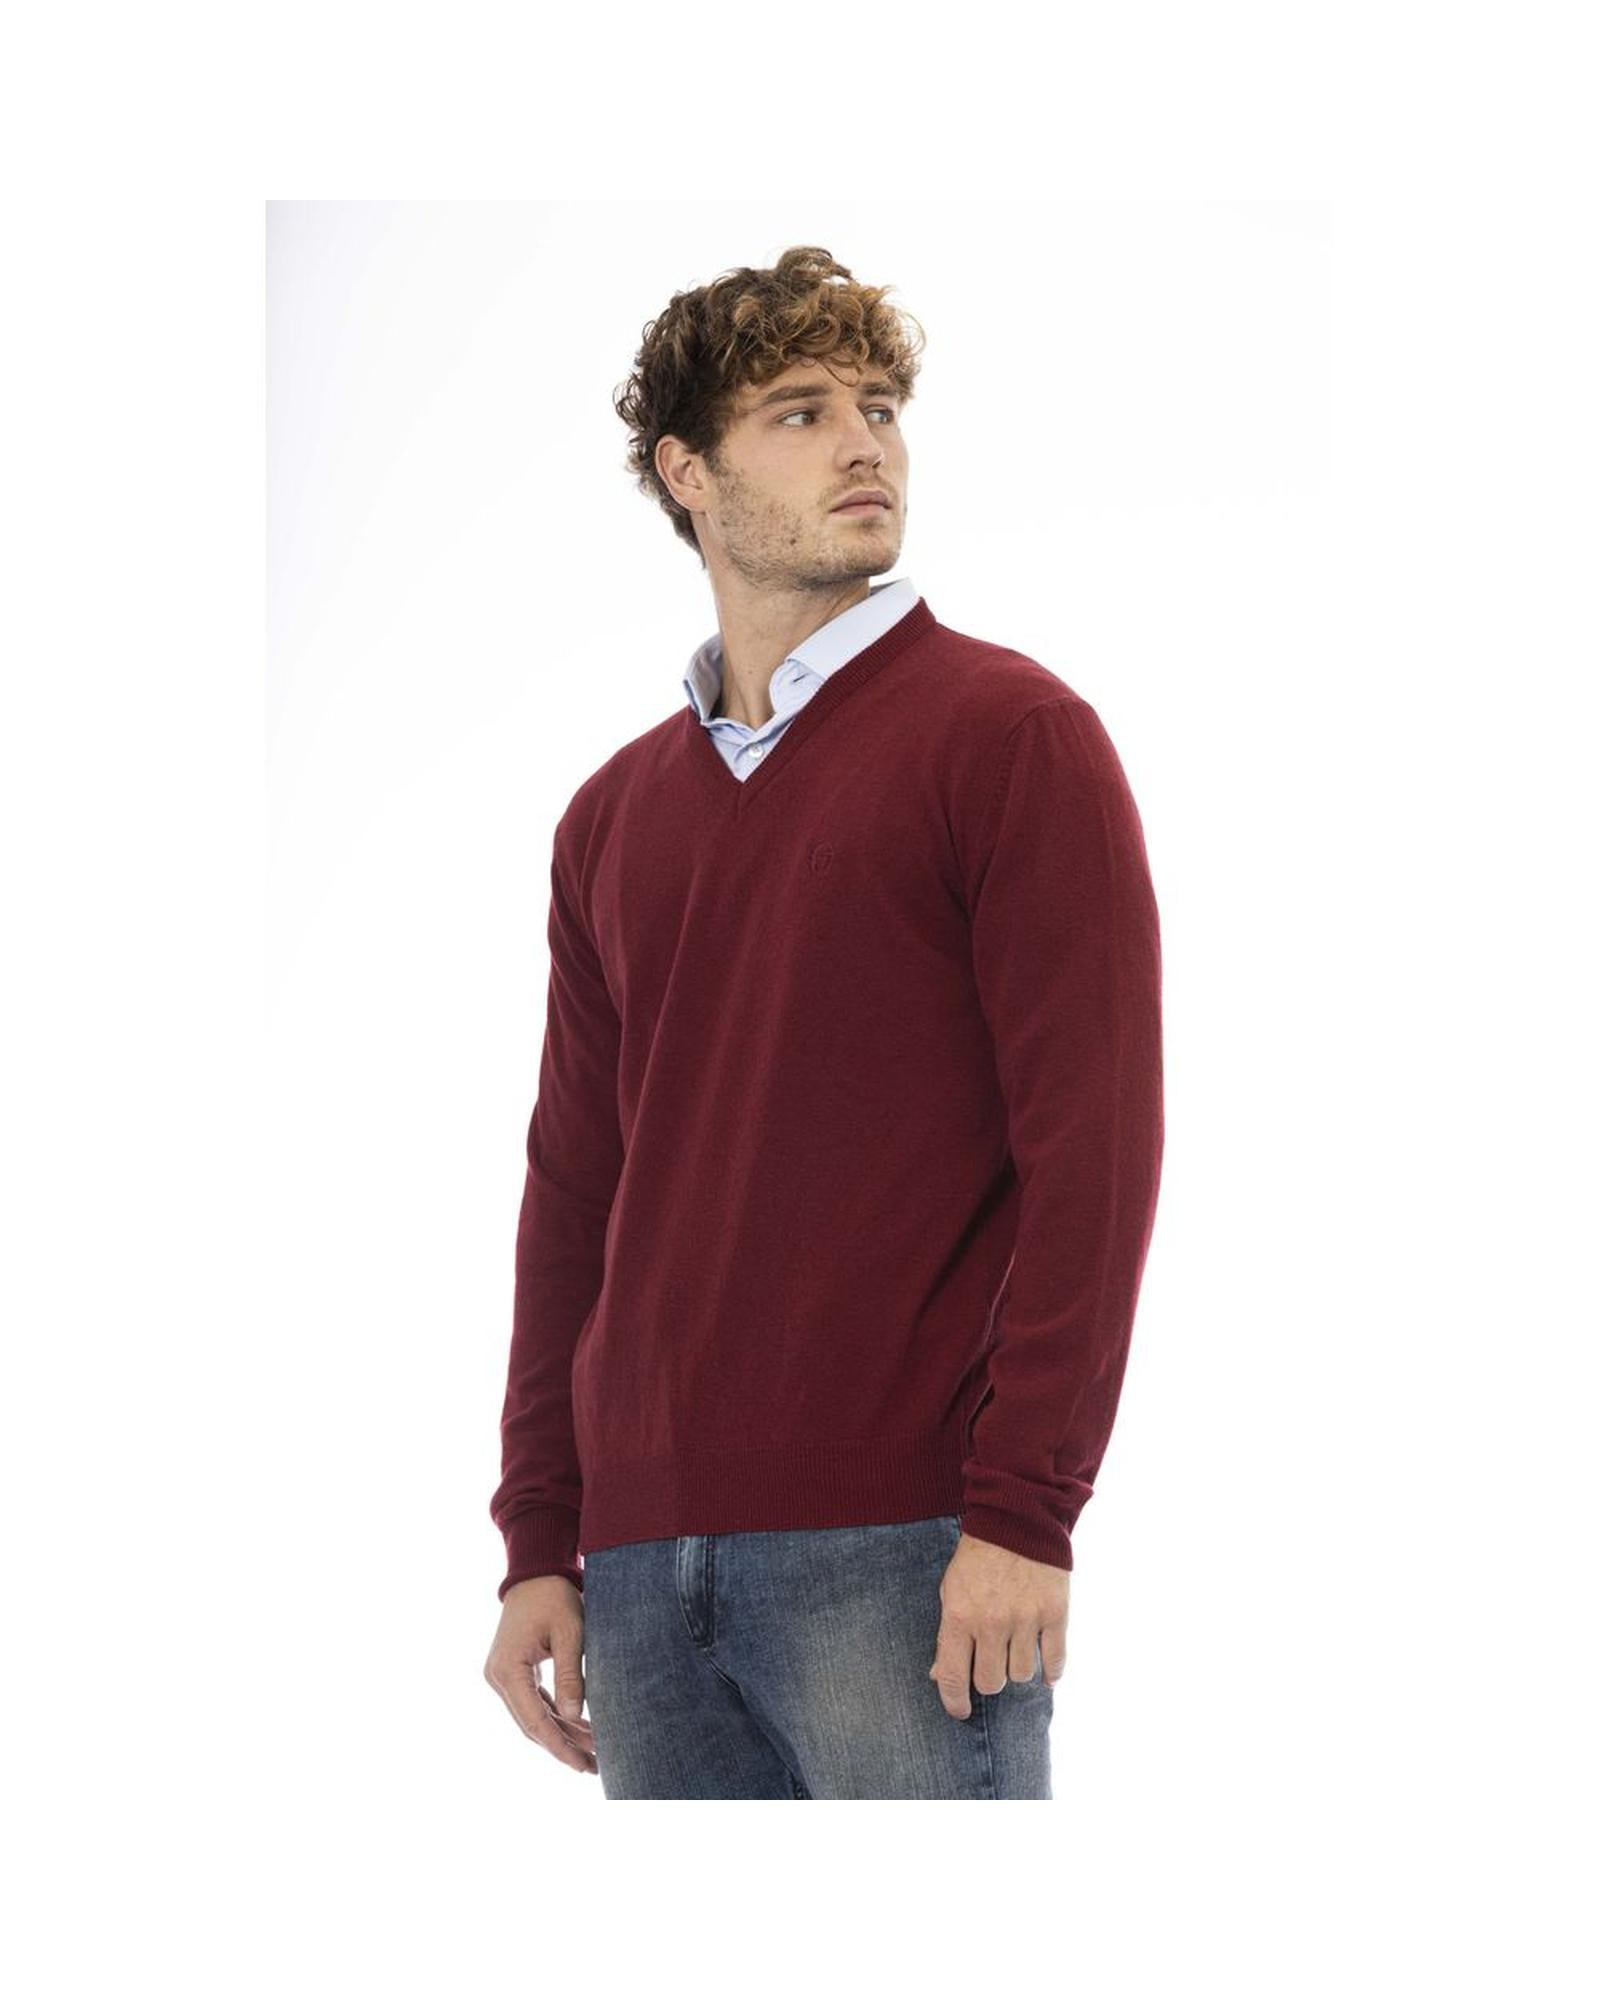 Men's Burgundy Wool Sweater - S